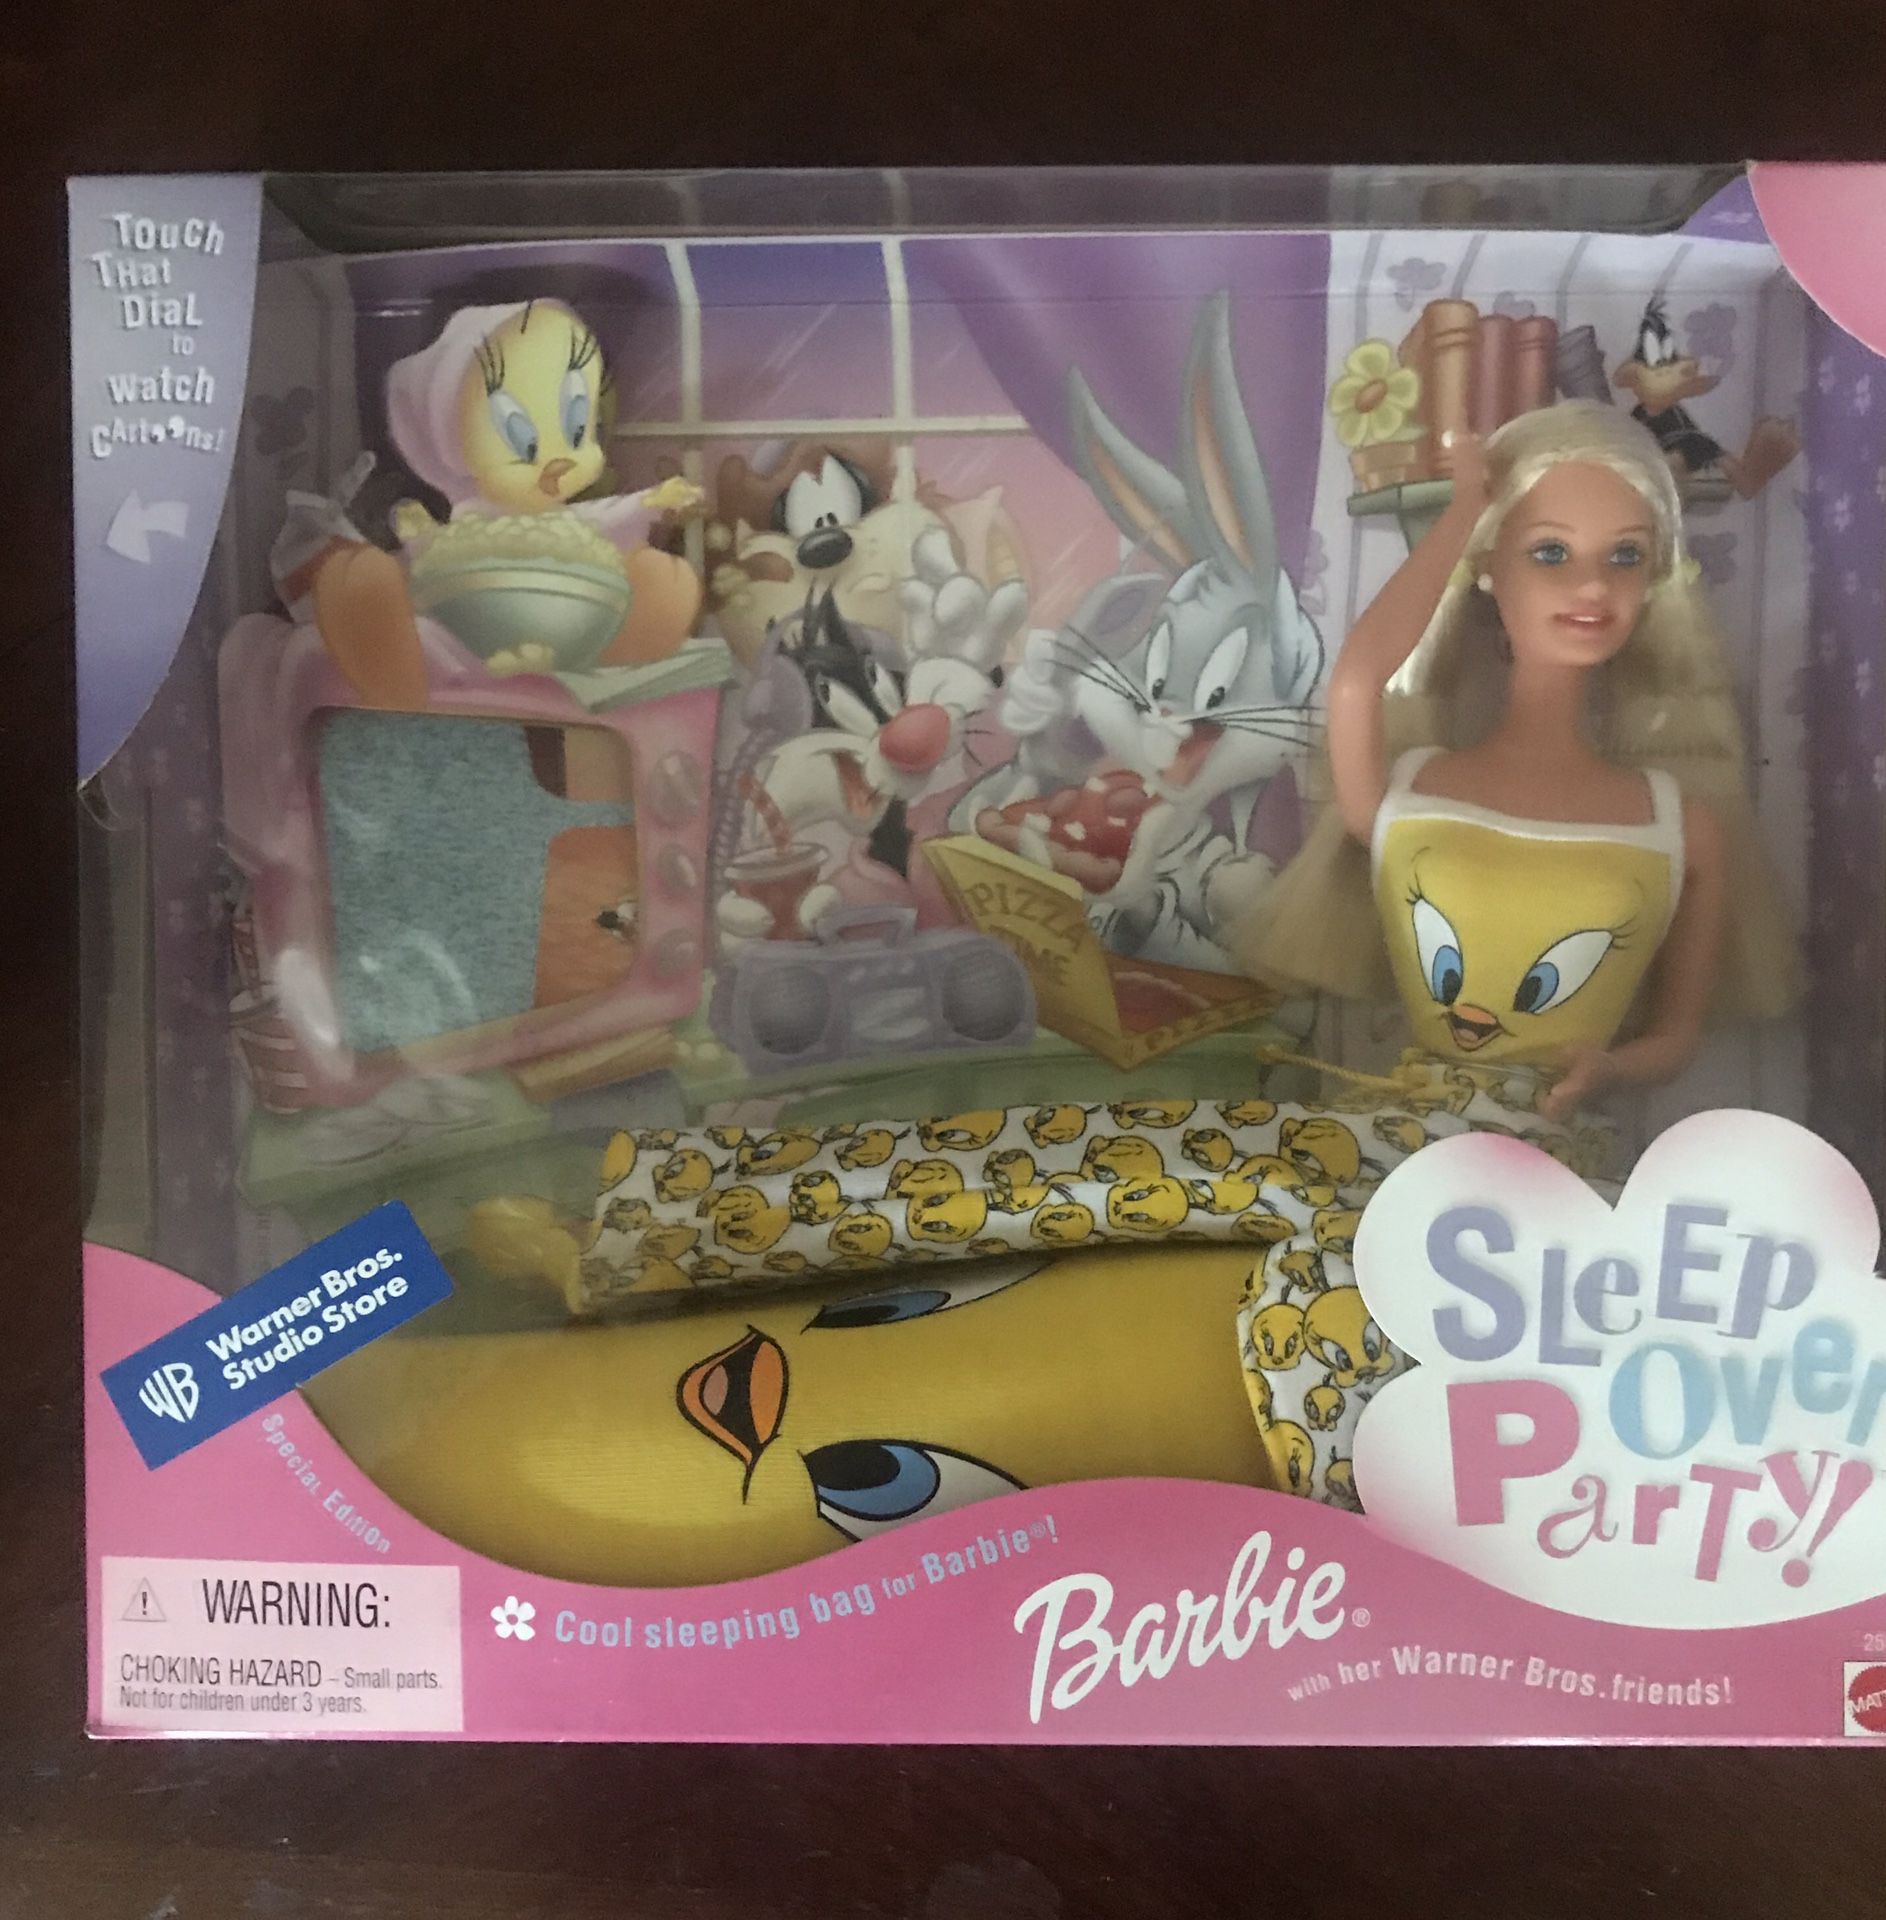 Warner Bros Studio Store Barbie Sleep Over Party Barbie.